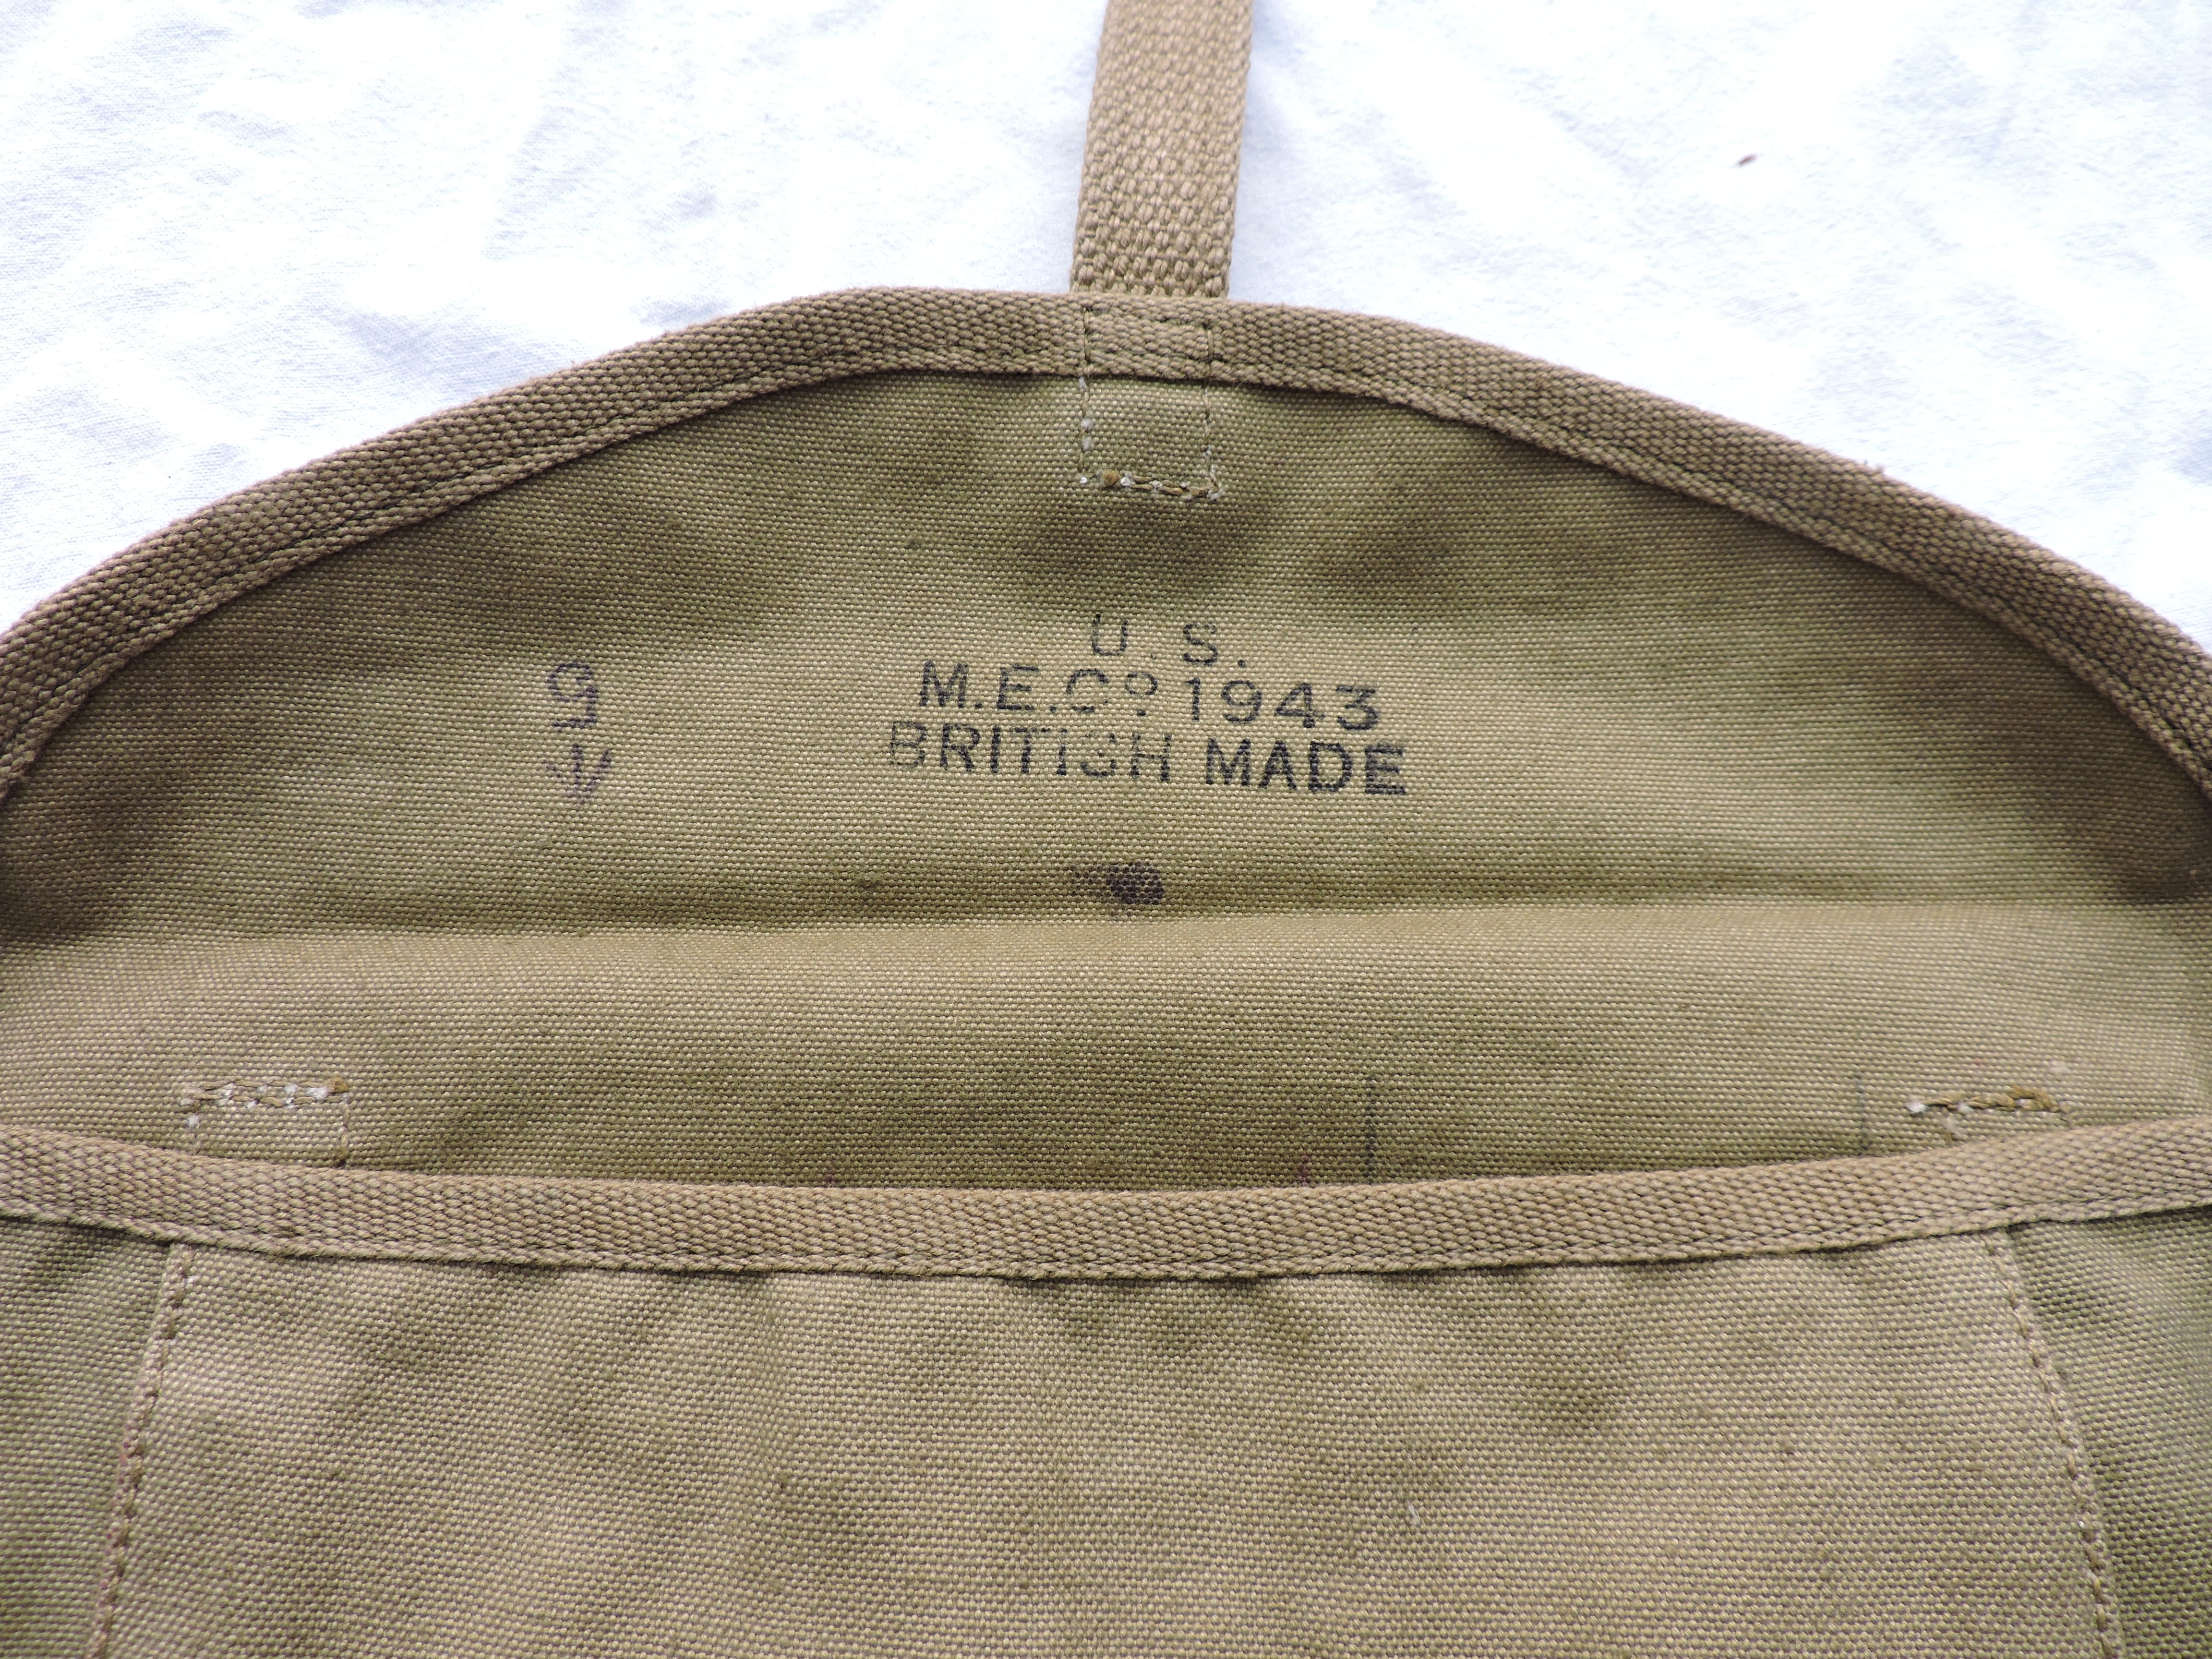 Pochette &agrave; gamelle pour haversack M-1928 British made 1943